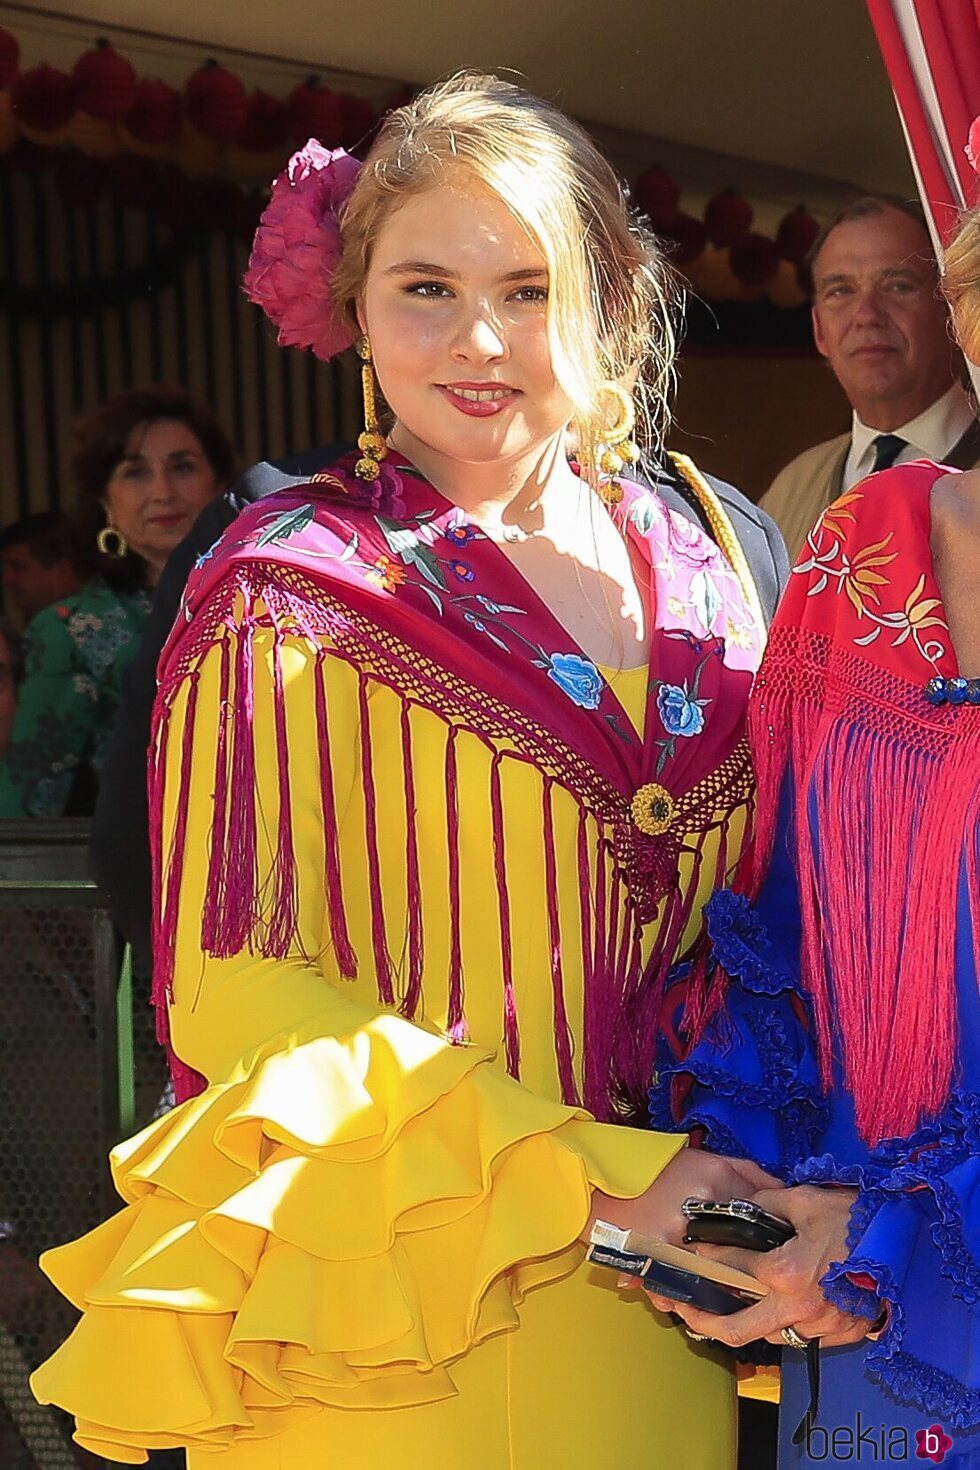 Amalia de Holanda, vestida de flamenca en la Feria de Abril de Sevilla